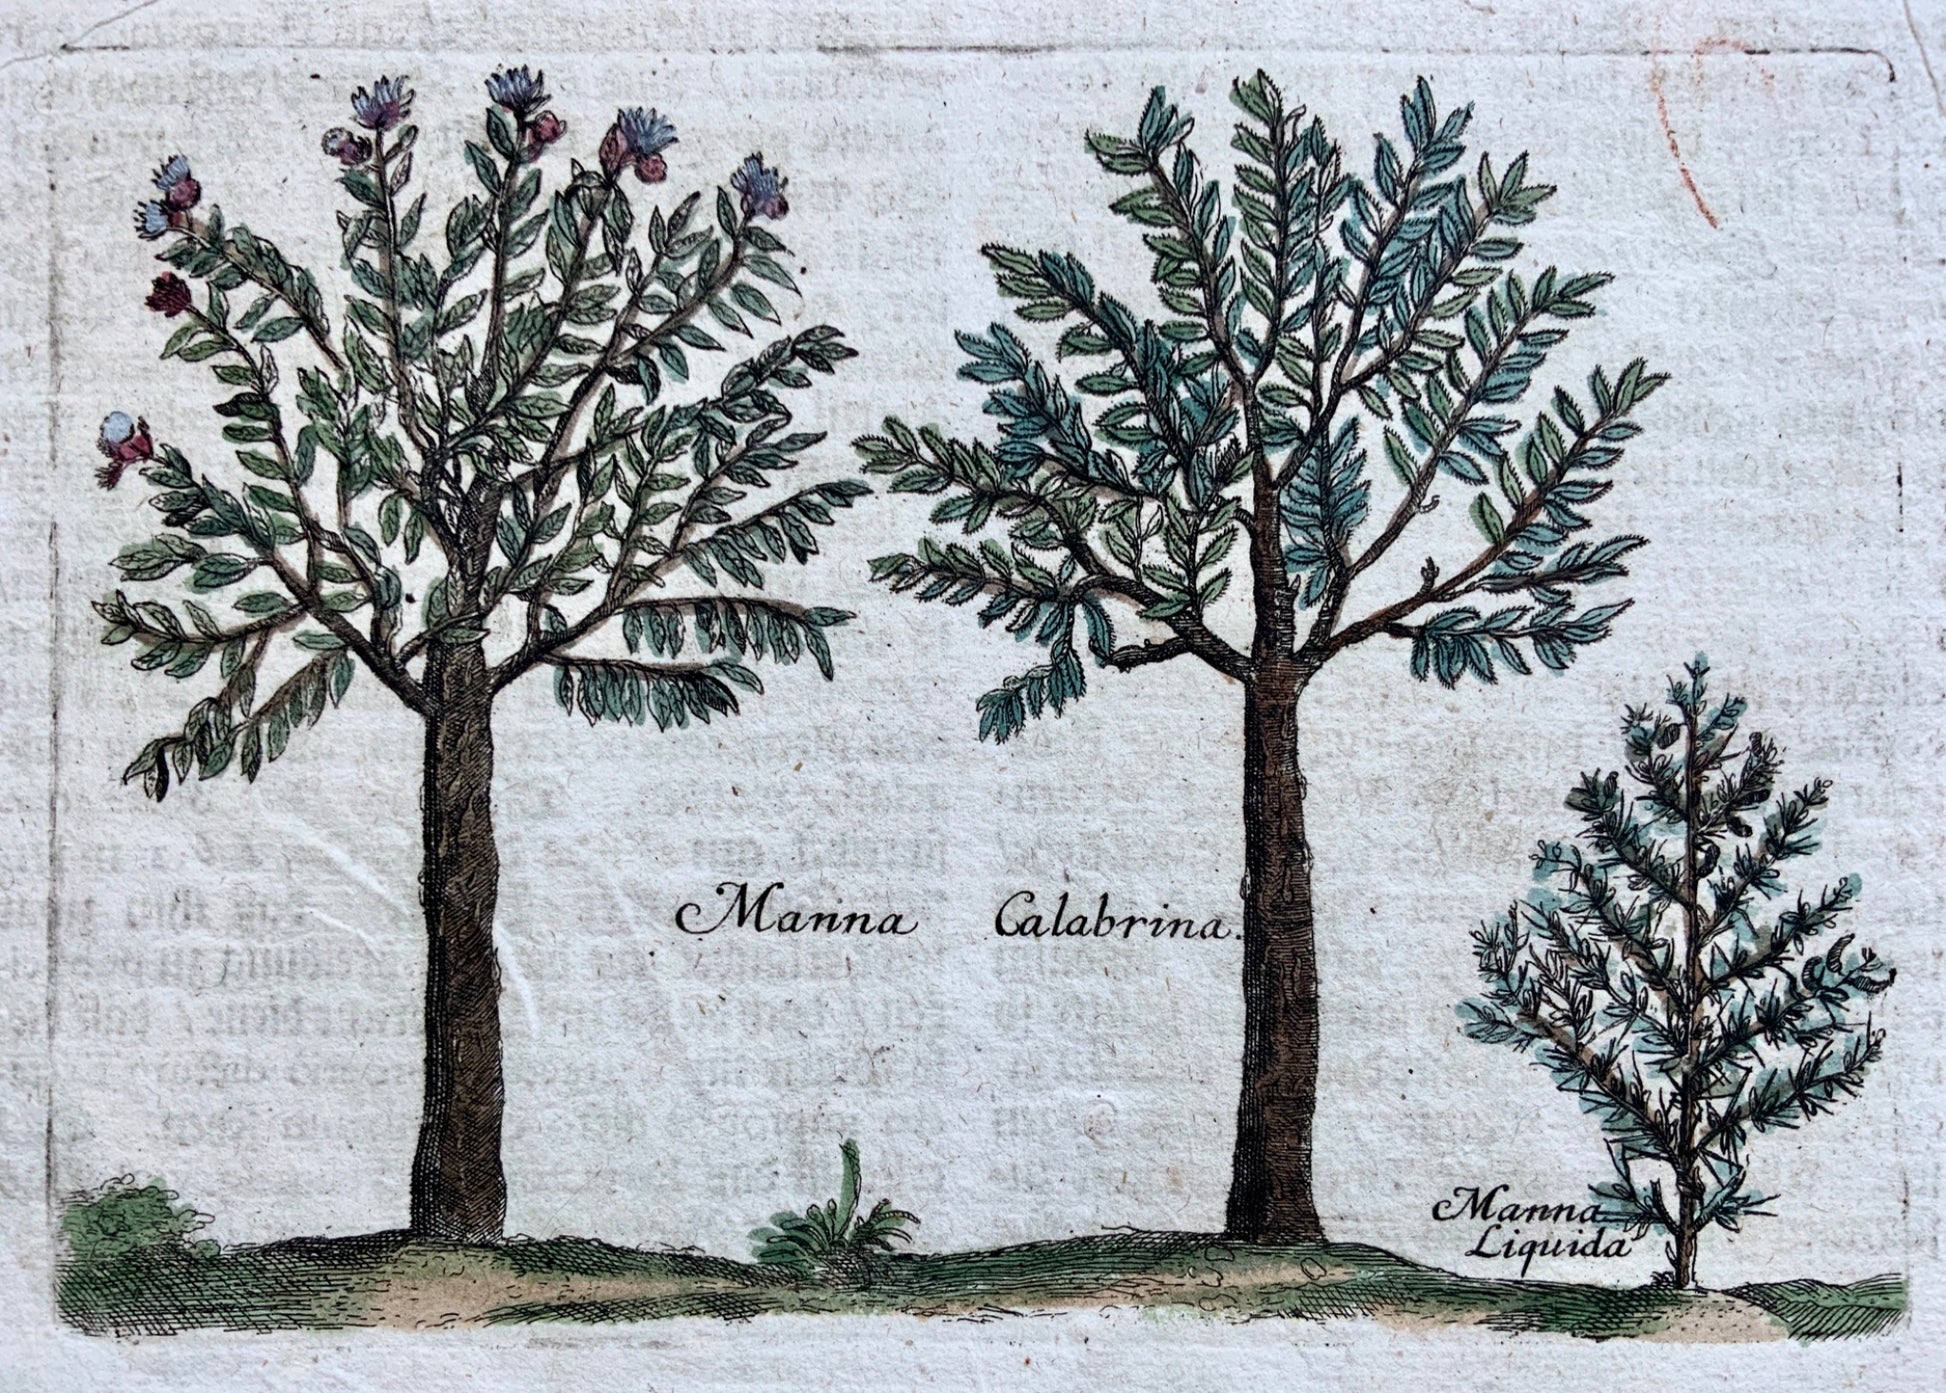 1704 Calabrian Manna - M. Valentini (1657-1729) - copper engraving - Botany